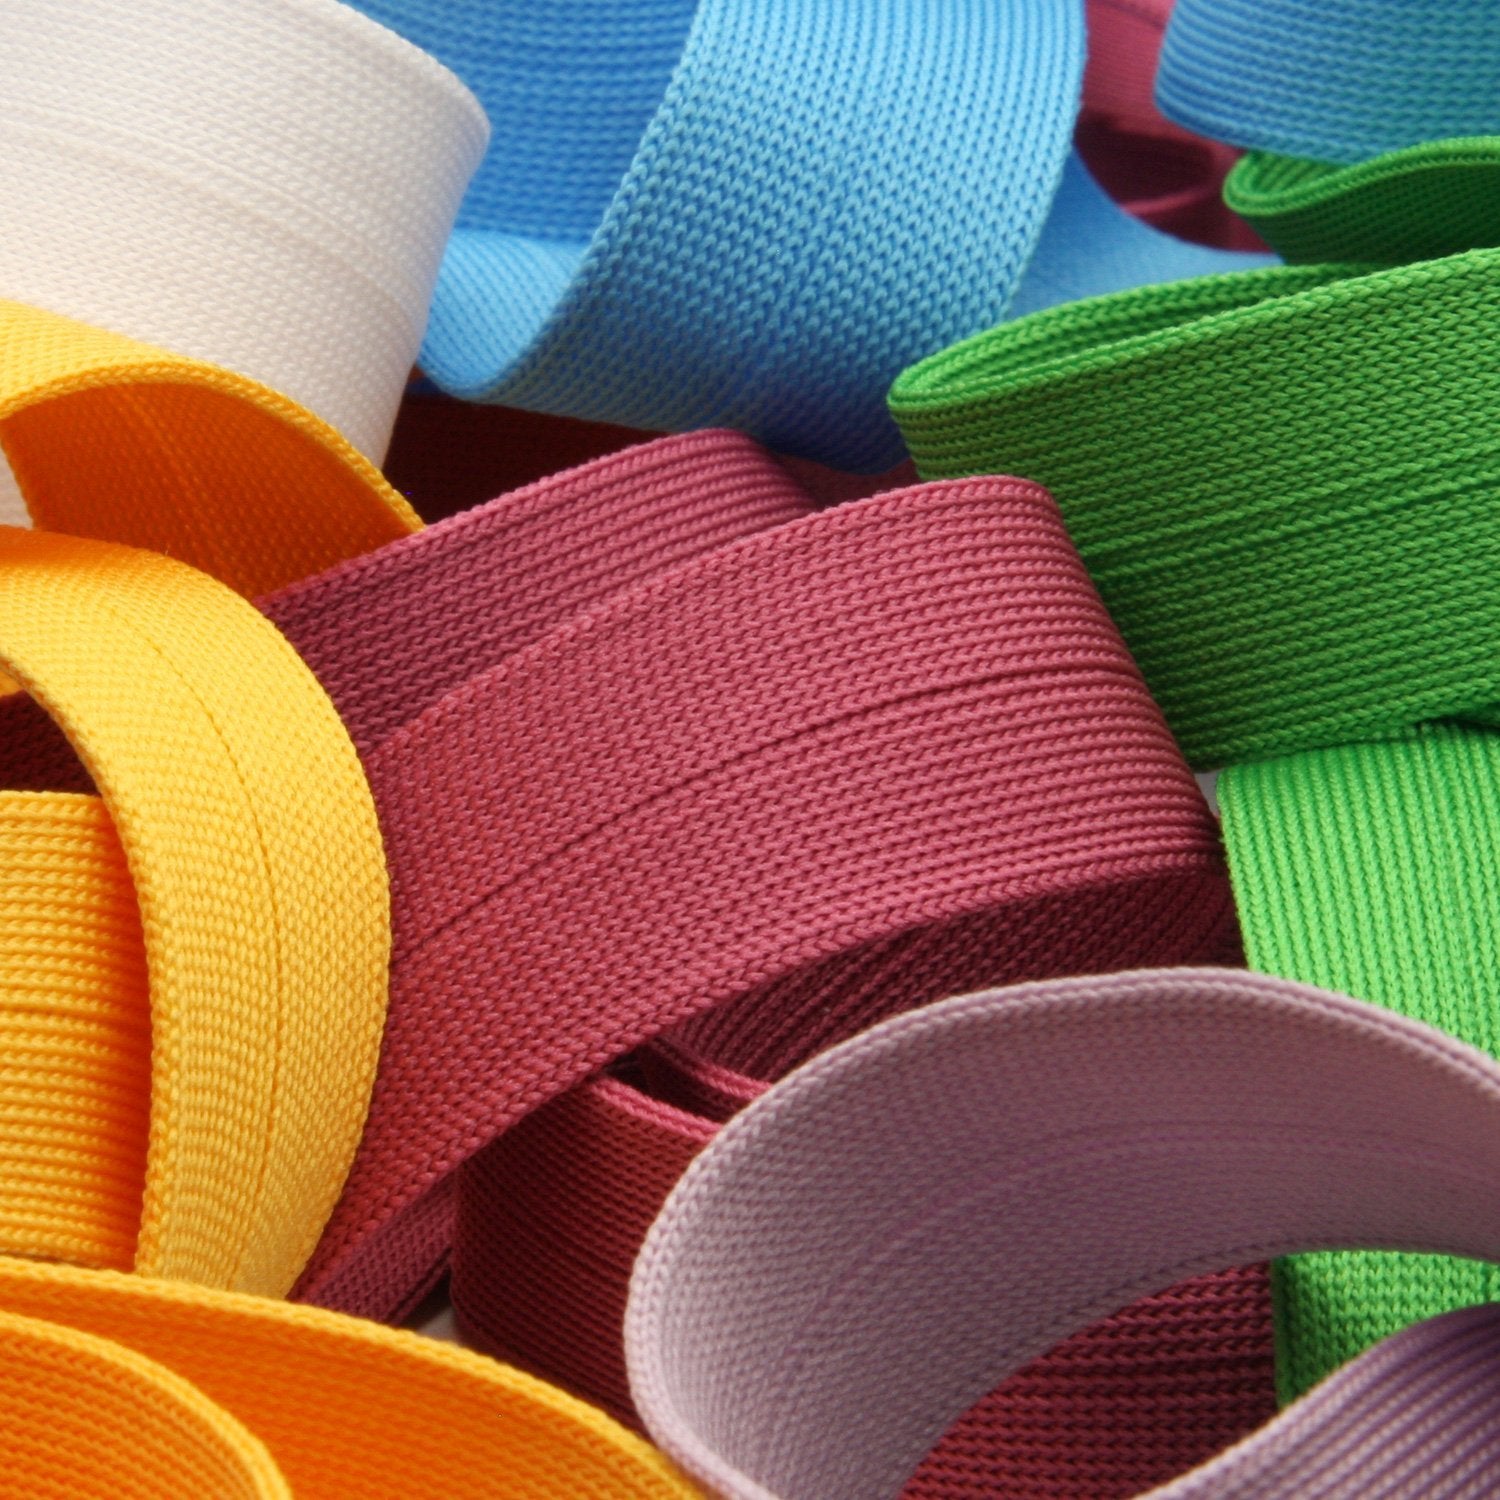 FUJIYAMA RIBBON [Wholesale] Polyester Thin Knit Binder Tape 9x9mm 30 Meters Roll